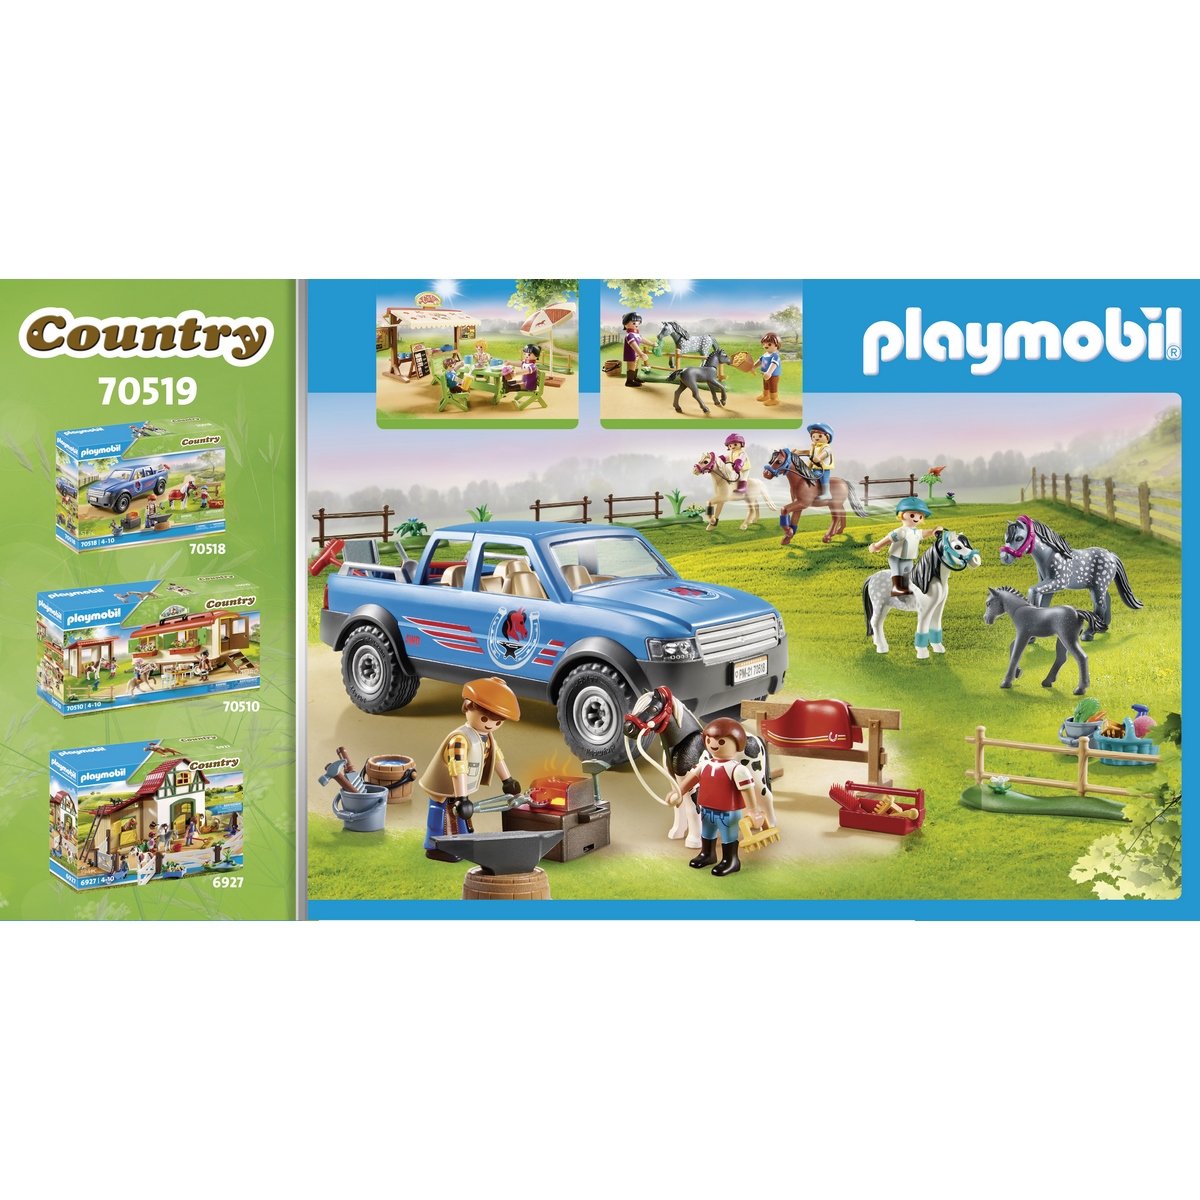 Poney club playmobil 6927 - Playmobil